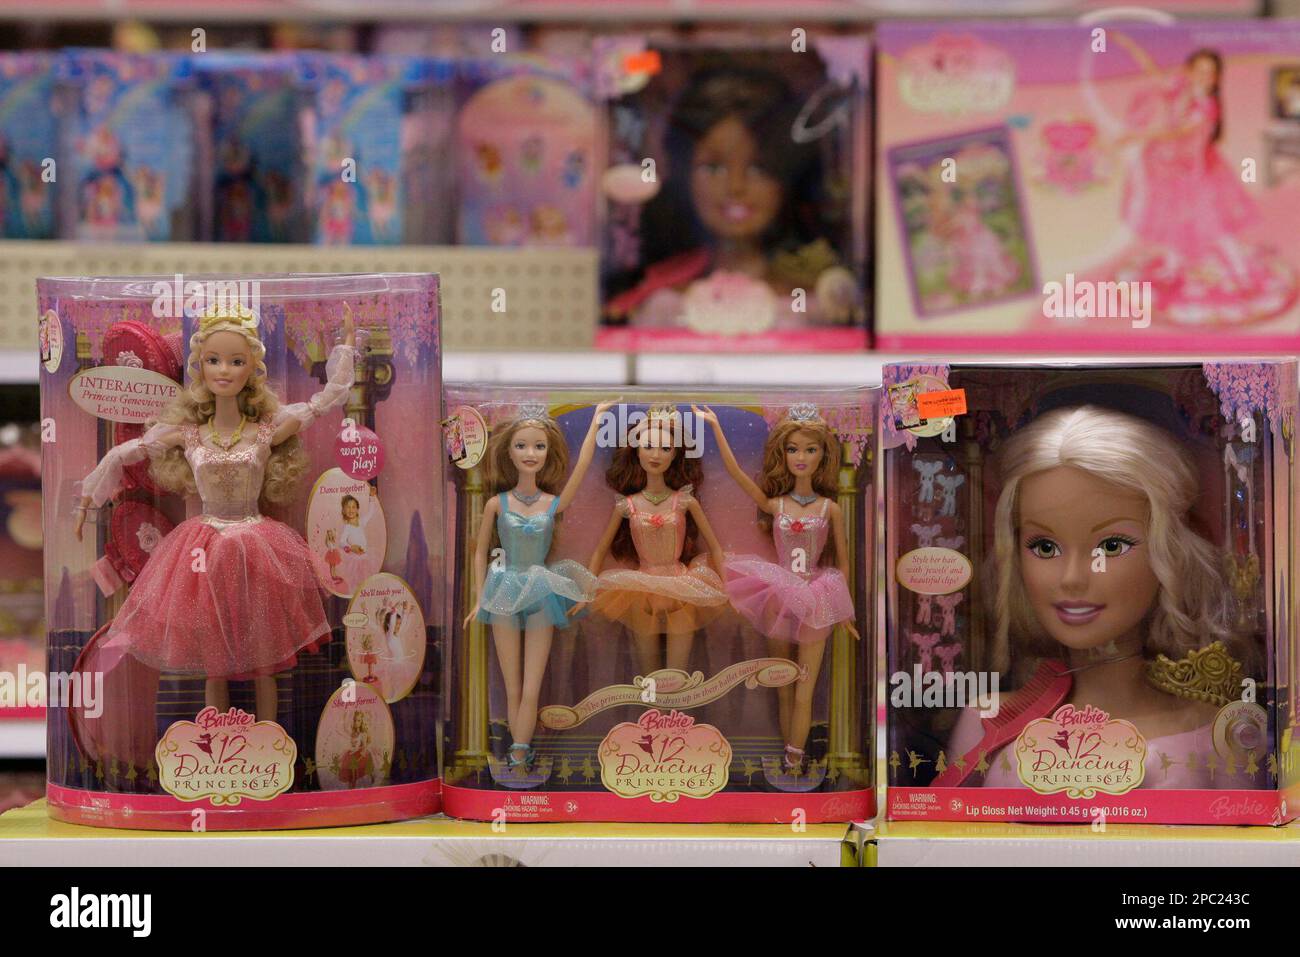 Bare gør indlæg Overlegenhed Dancing Princess Barbie dolls are displayed at a ToysRus in Monrovia,  Calif., Monday, Jan. 29, 2007. Mattel Inc., the world's largest toymaker,  said Monday its fourth quarter profit rose 3 percent boosted